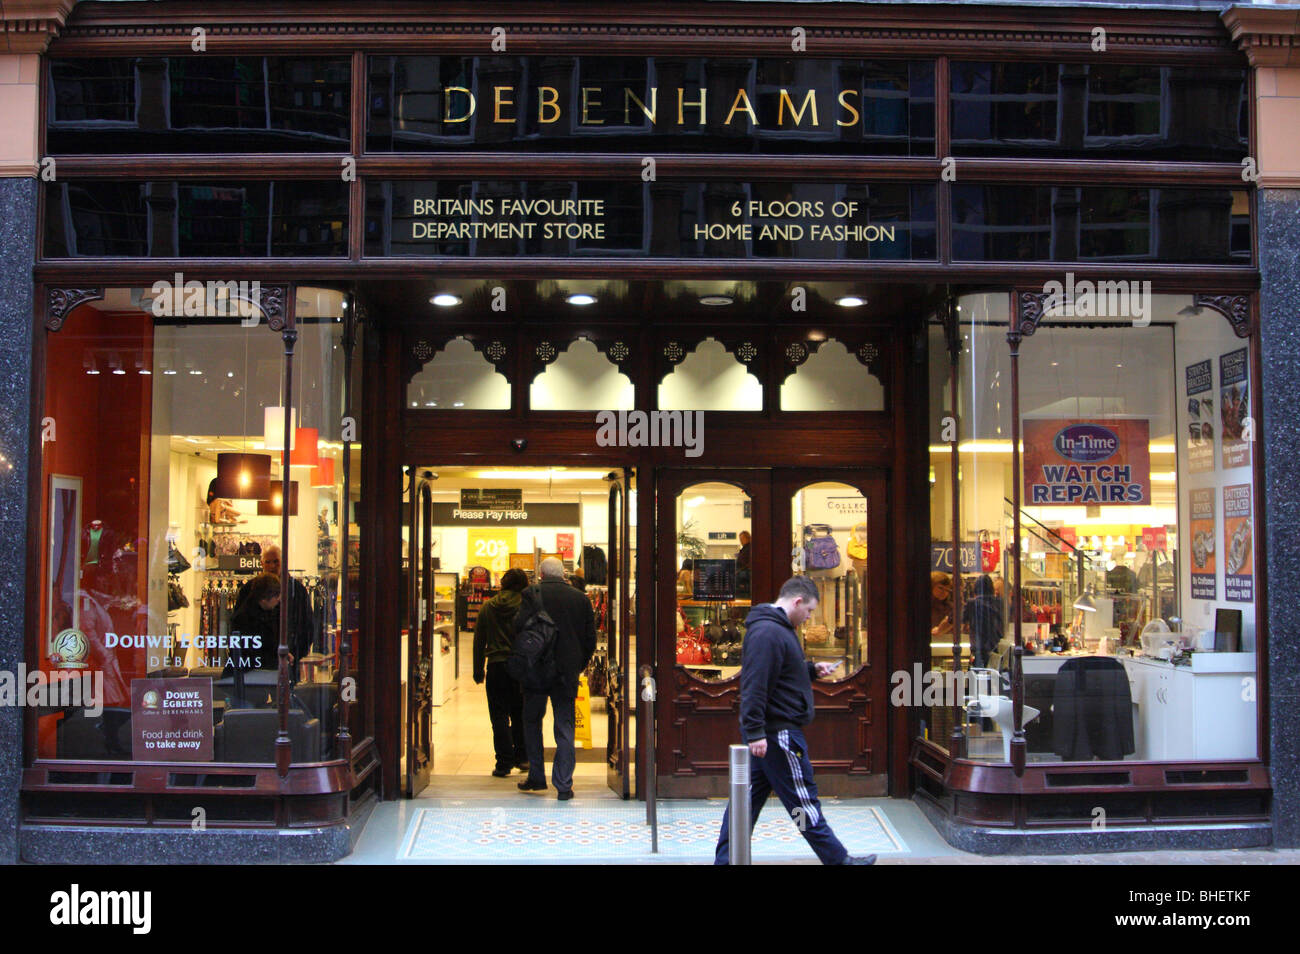 A Debenhams department store in Leeds, England, U.K. Stock Photo